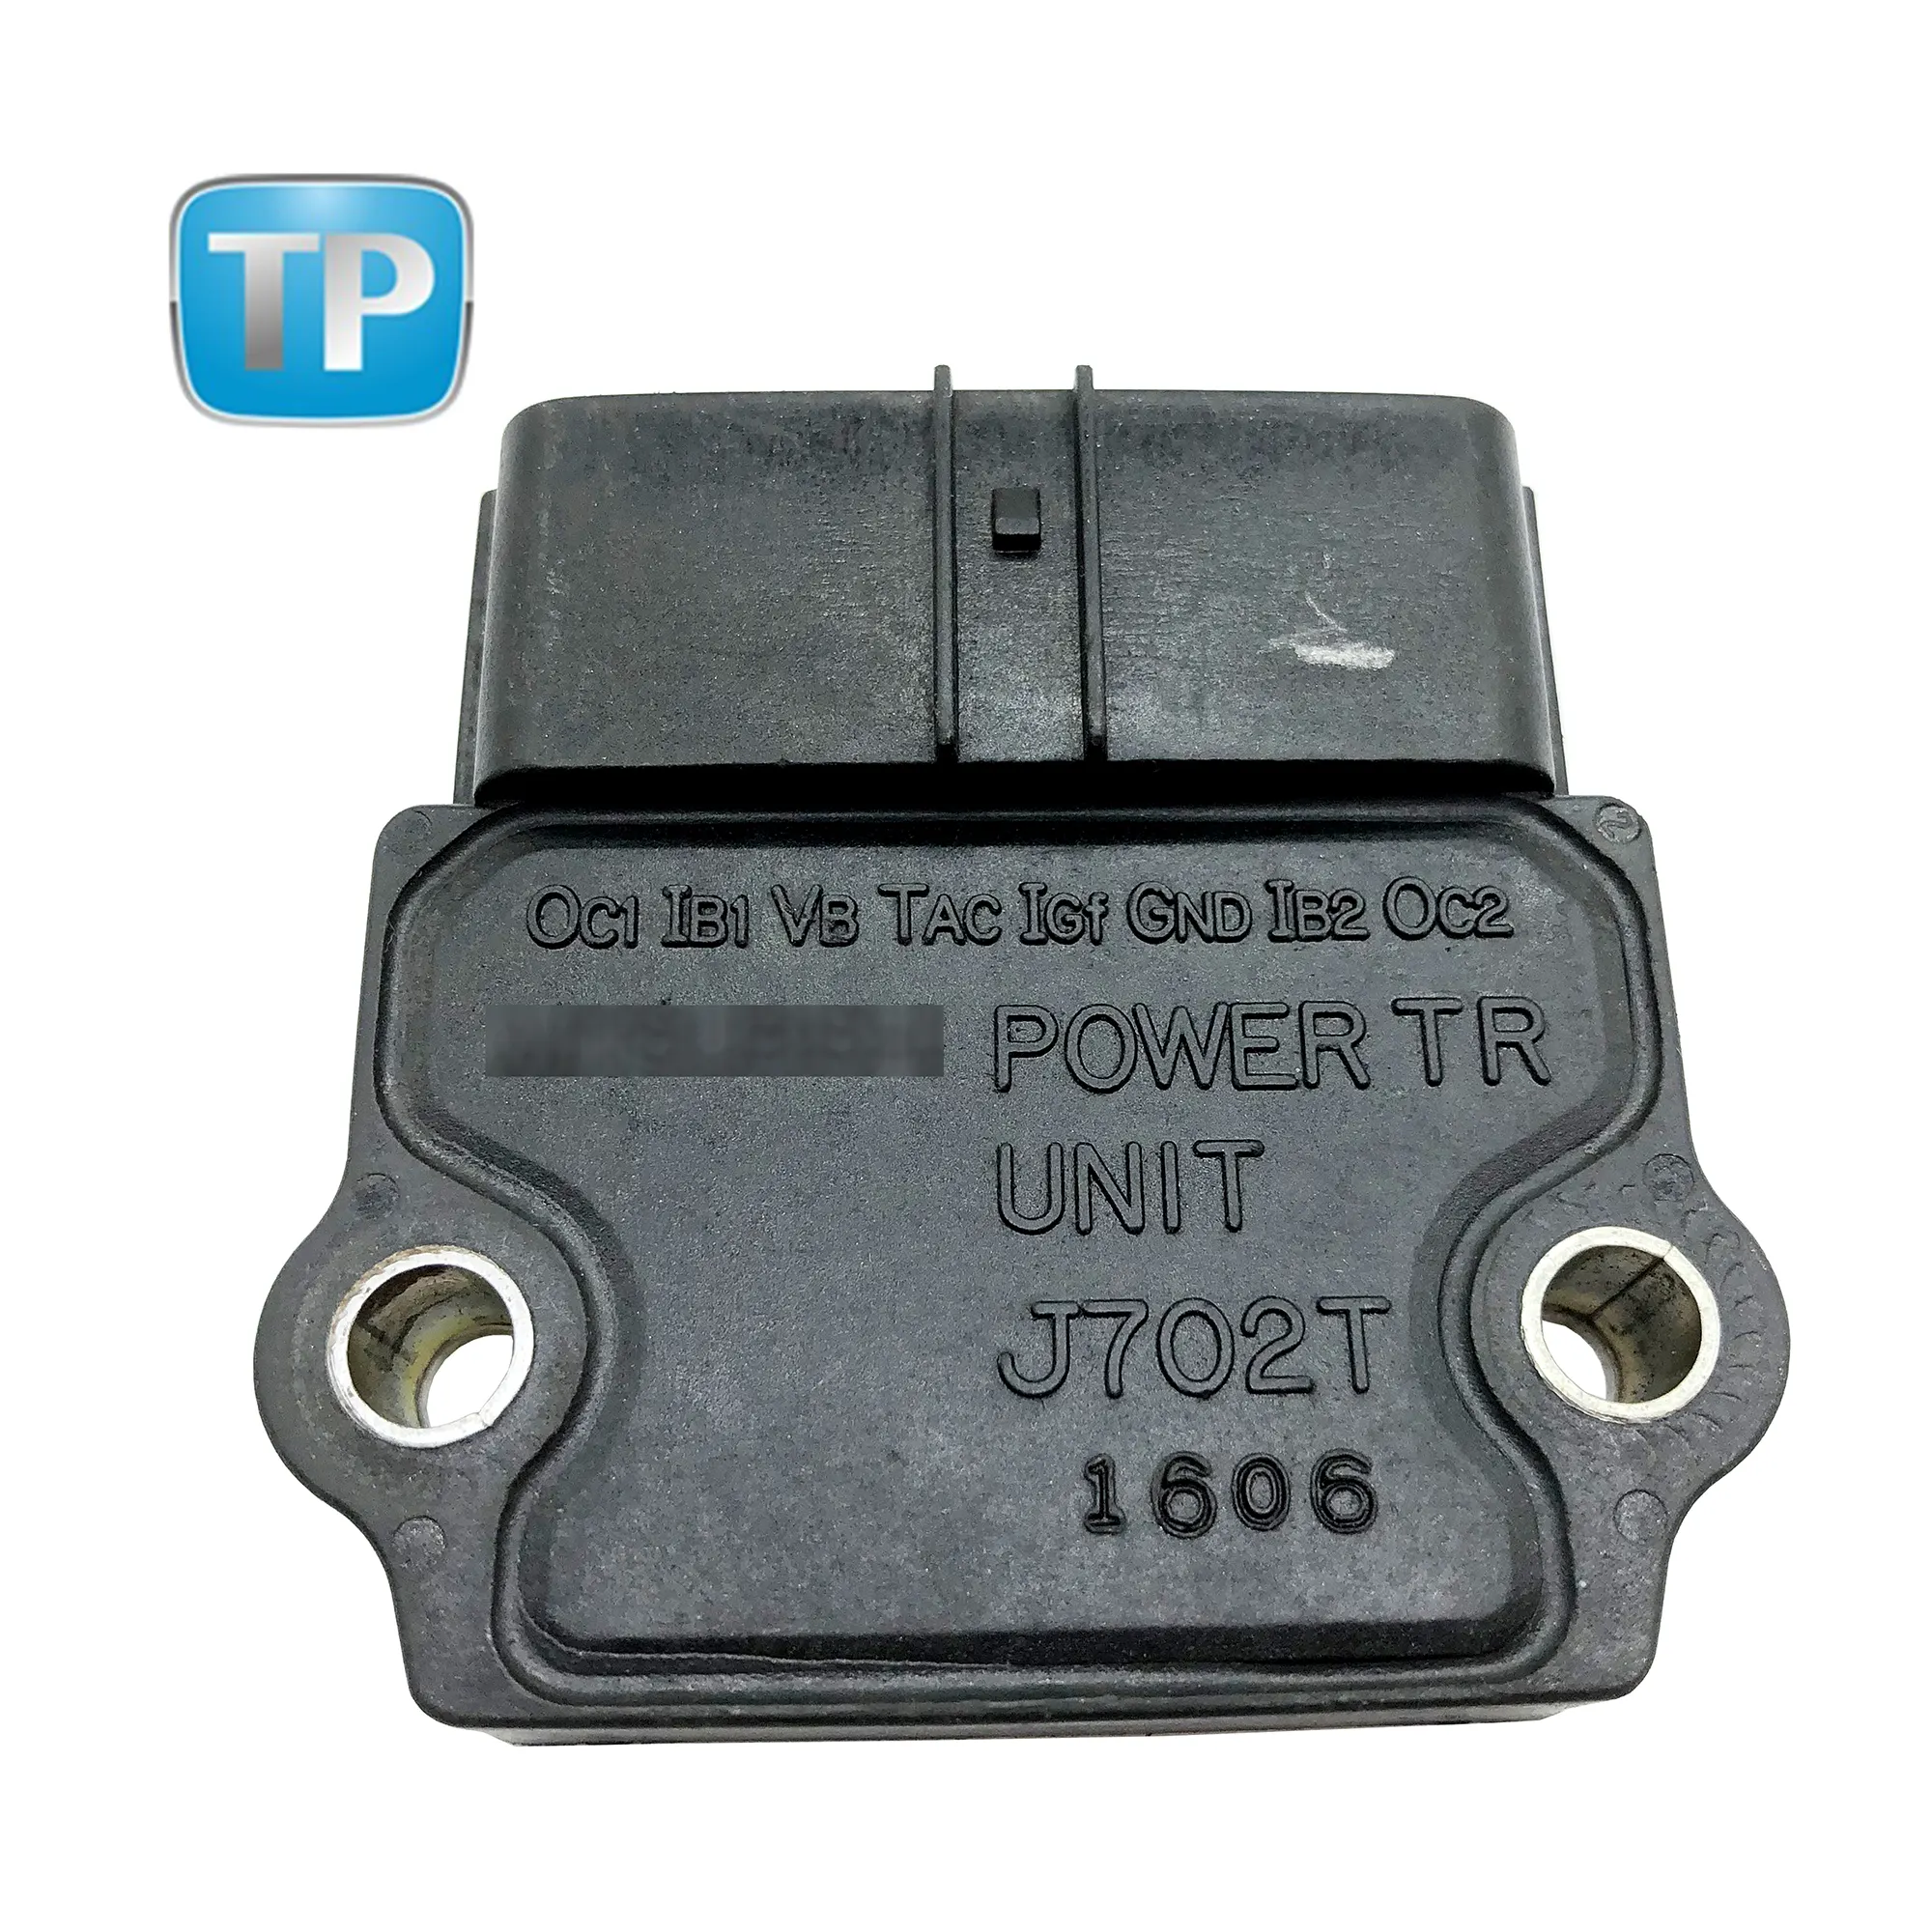 HIGH QUALITY Power Transistor Ignition Control Module for Mazda Miata J702T B61P-18-251 B61P18251